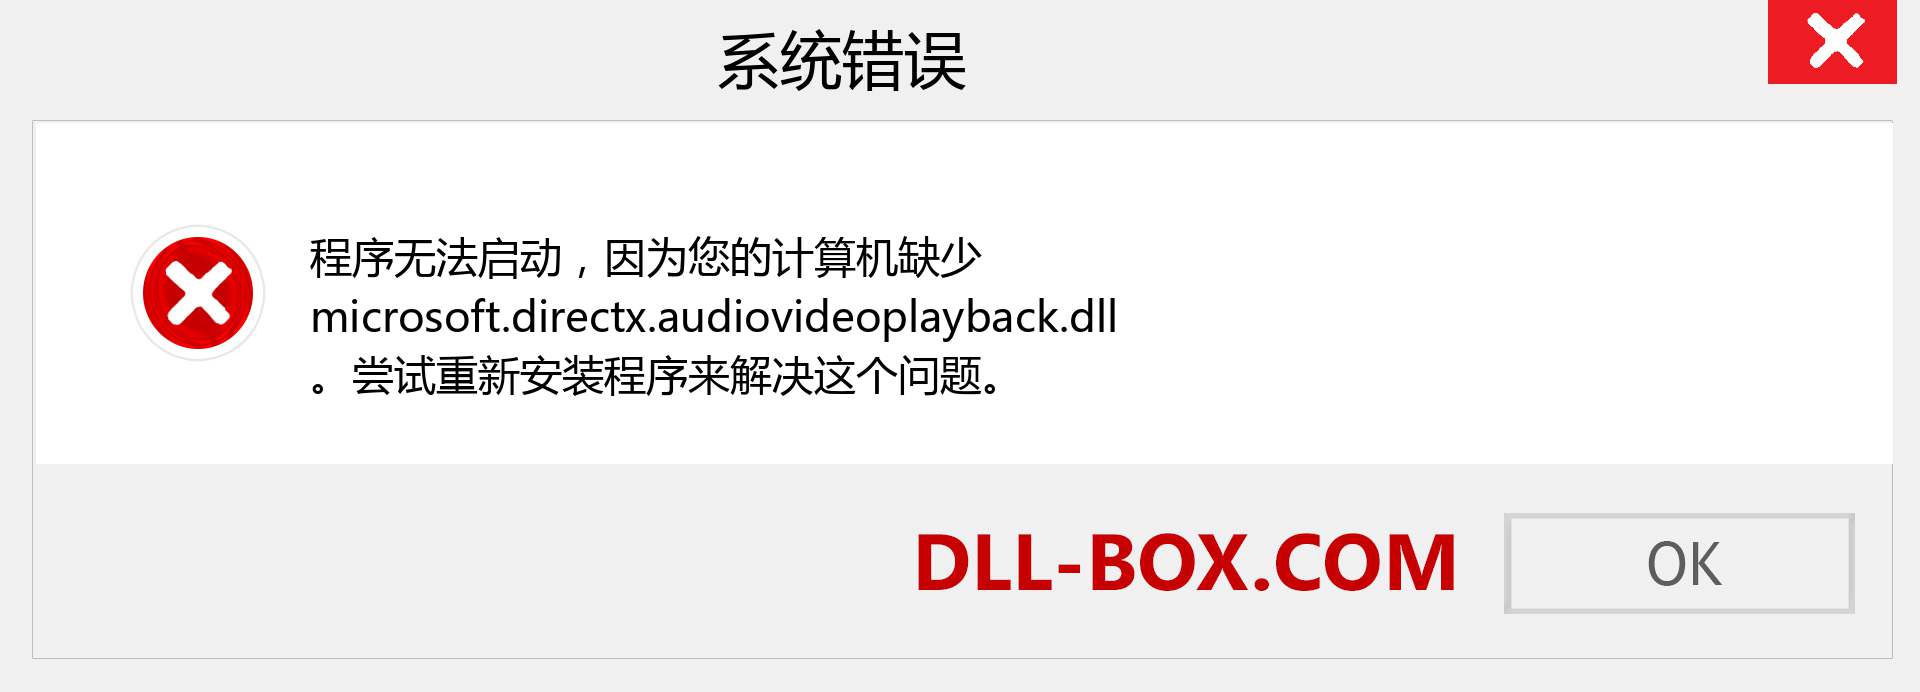 microsoft.directx.audiovideoplayback.dll 文件丢失？。 适用于 Windows 7、8、10 的下载 - 修复 Windows、照片、图像上的 microsoft.directx.audiovideoplayback dll 丢失错误